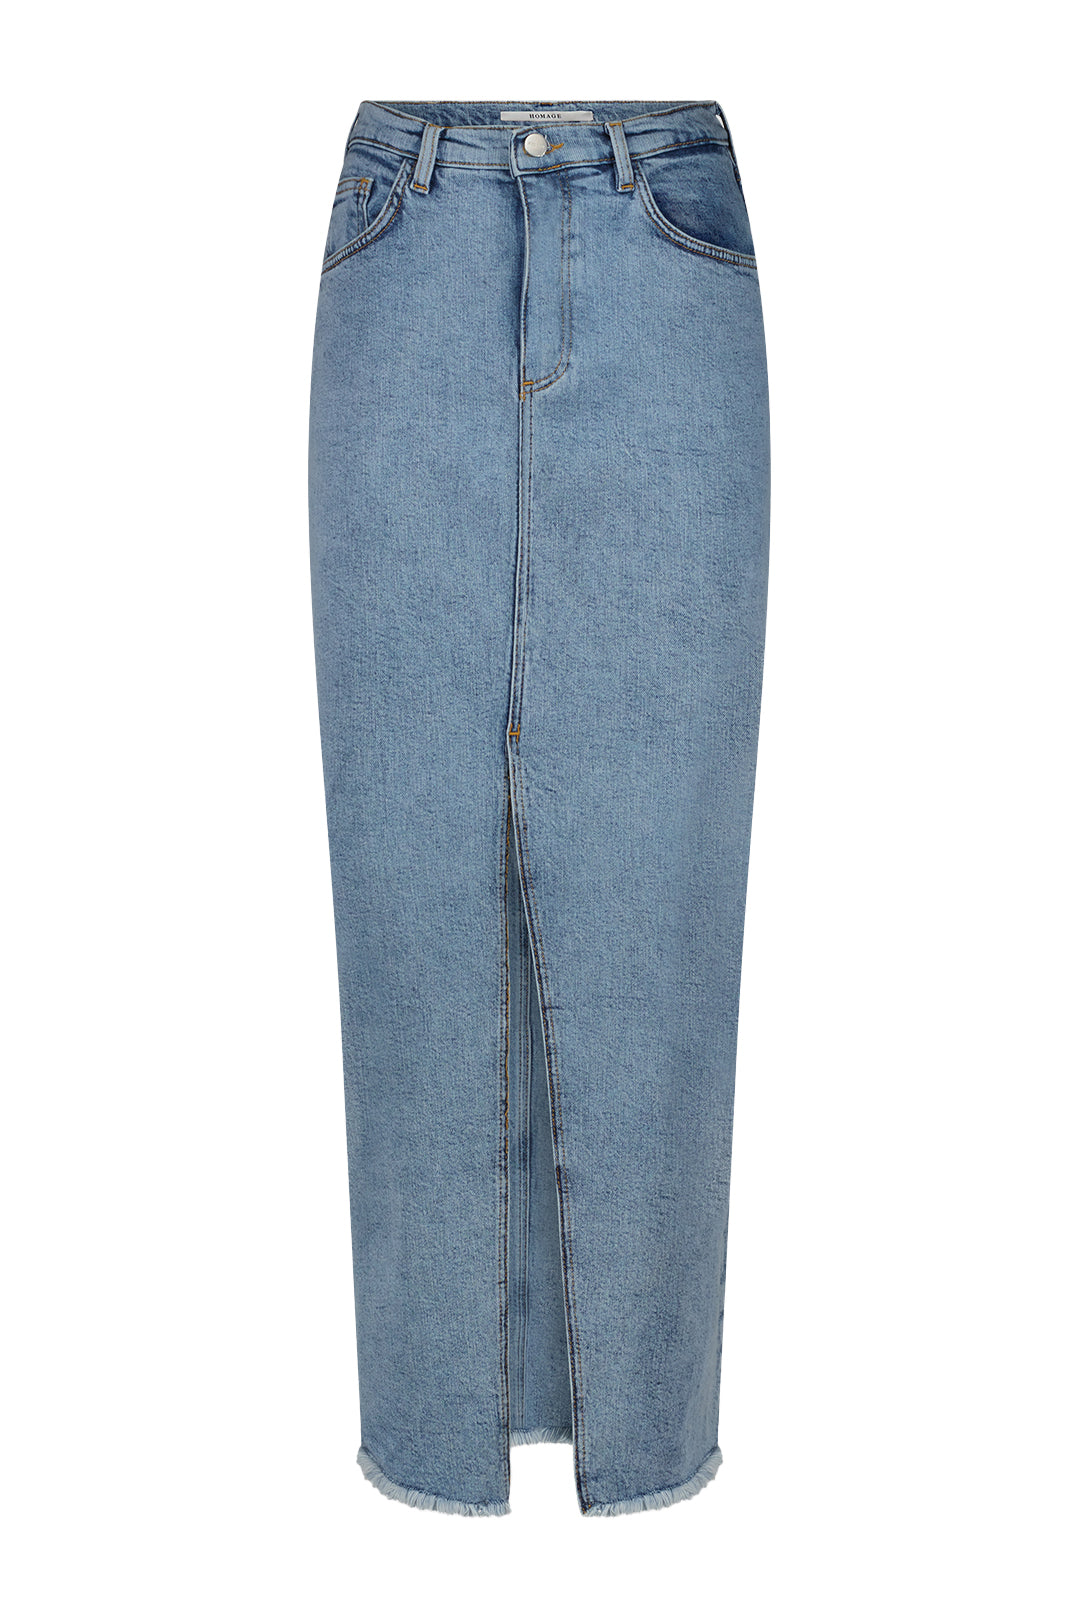 Long Denim Skirt with Slit - Mid Vintage